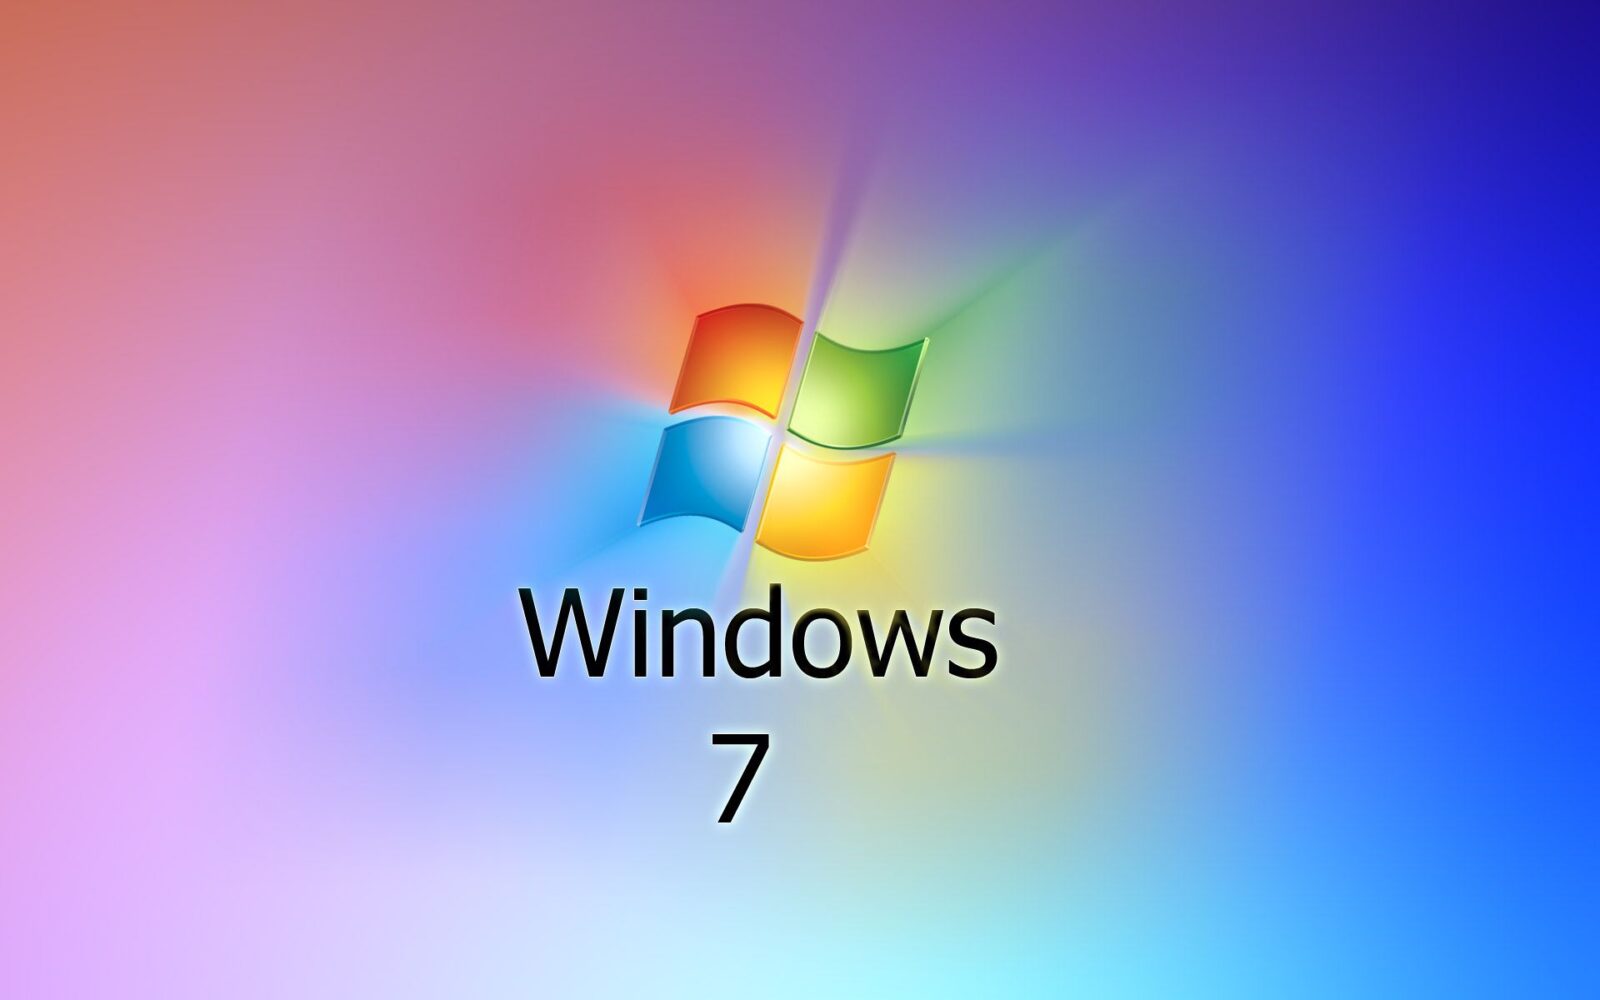 Windows 7 llega a su fin